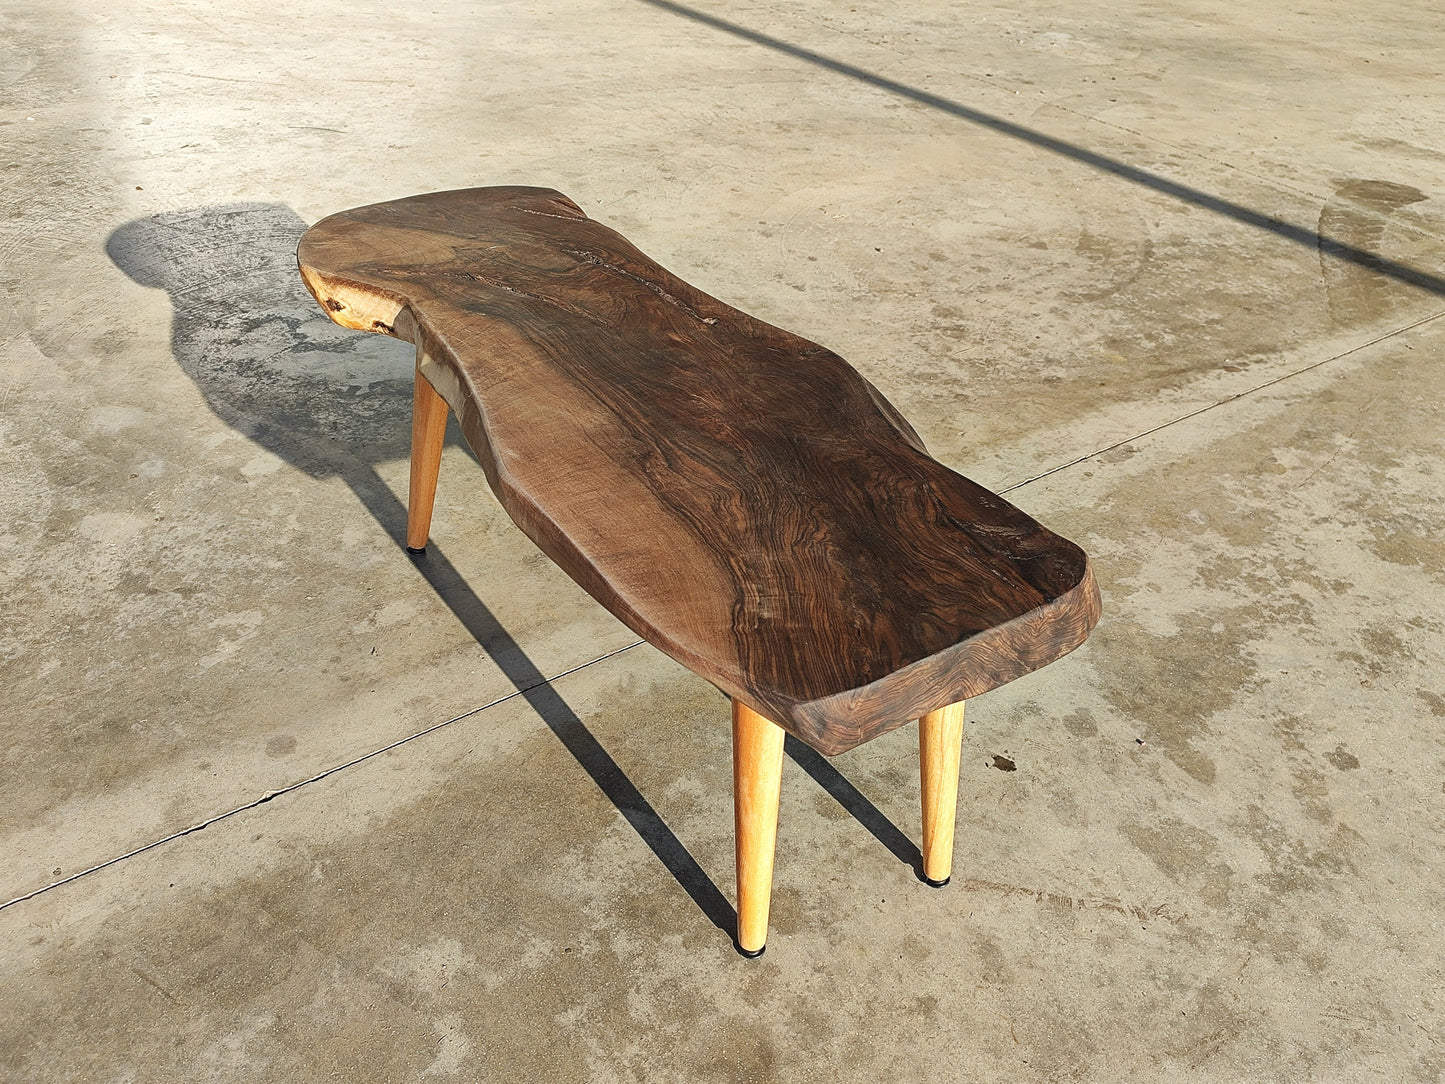 Rustic Handmade Wood Coffee Table - Unique Walnut (WG-1051)